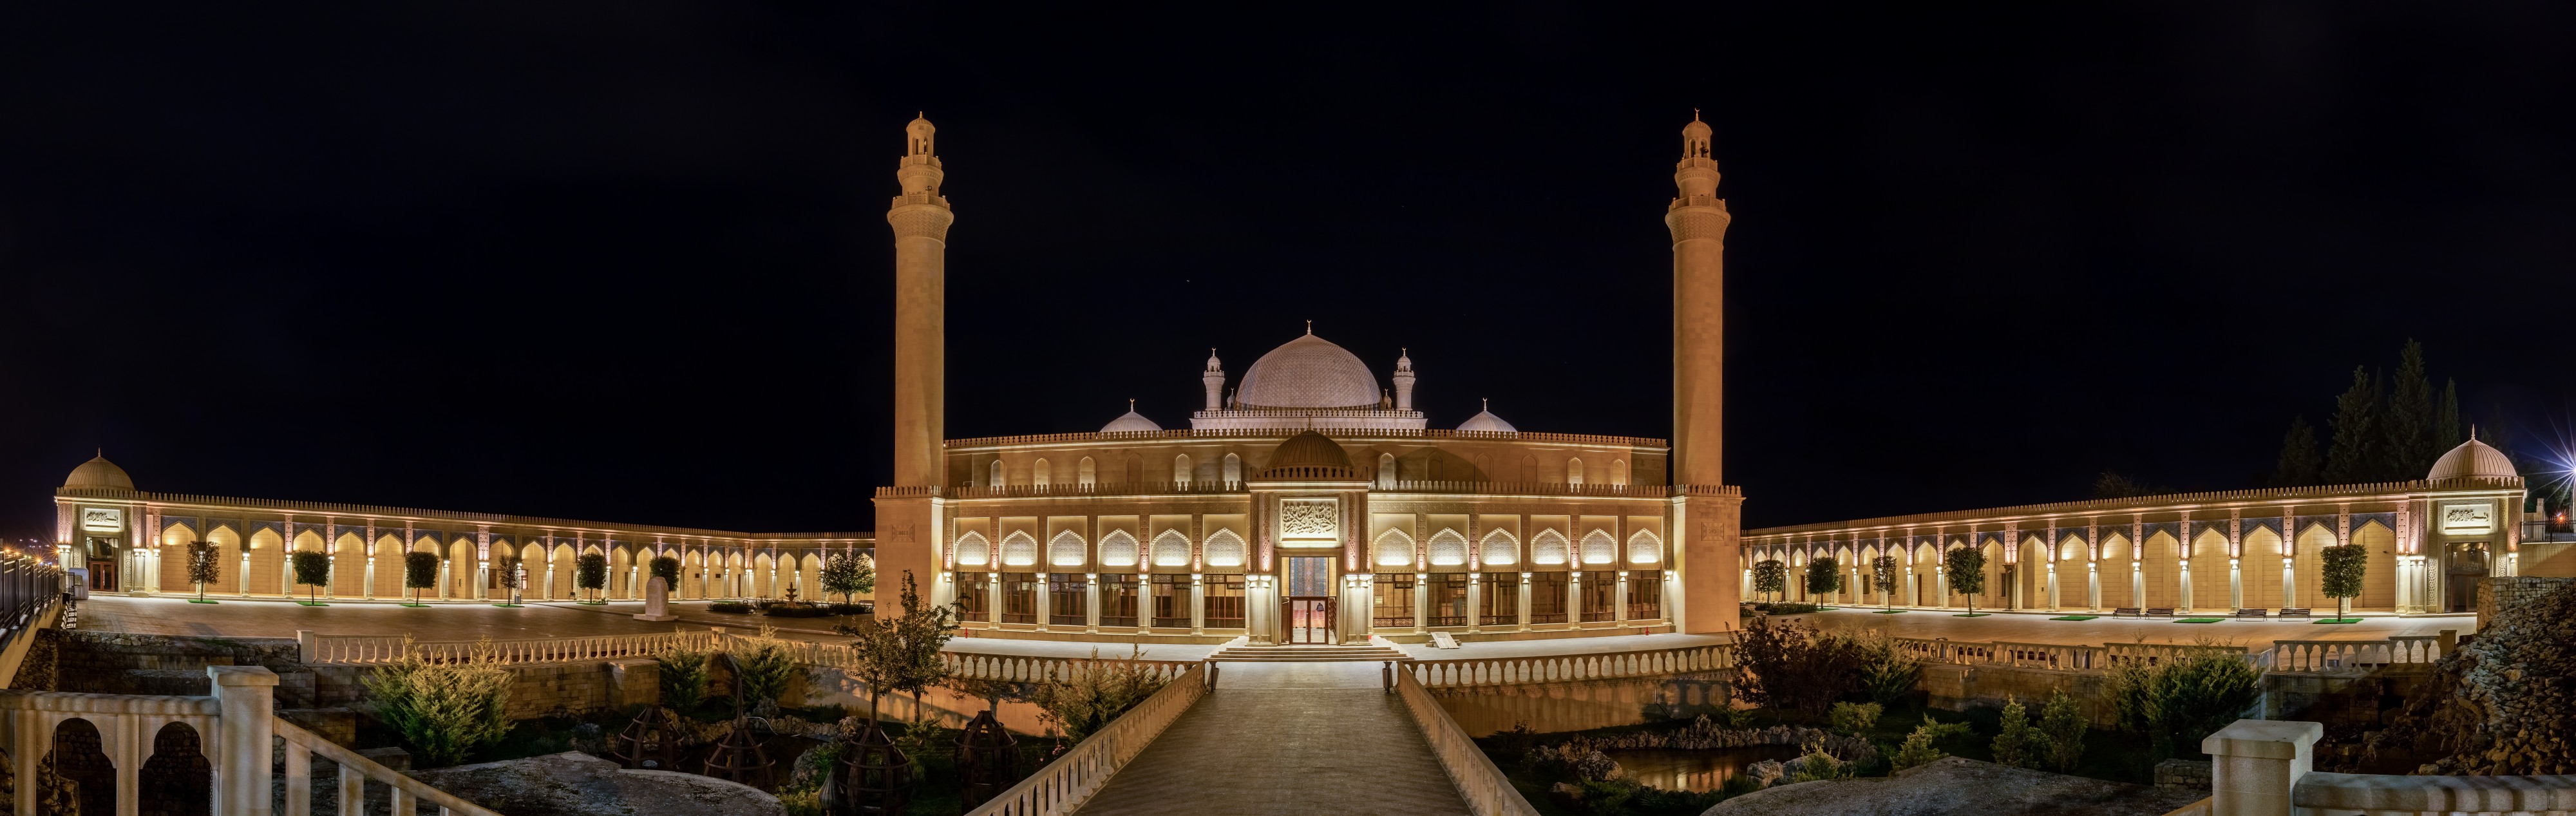 Mezquita del Viernes, Shamakhi, Azerbaiyán, 2016-09-27, DD 22-36 HDR PAN